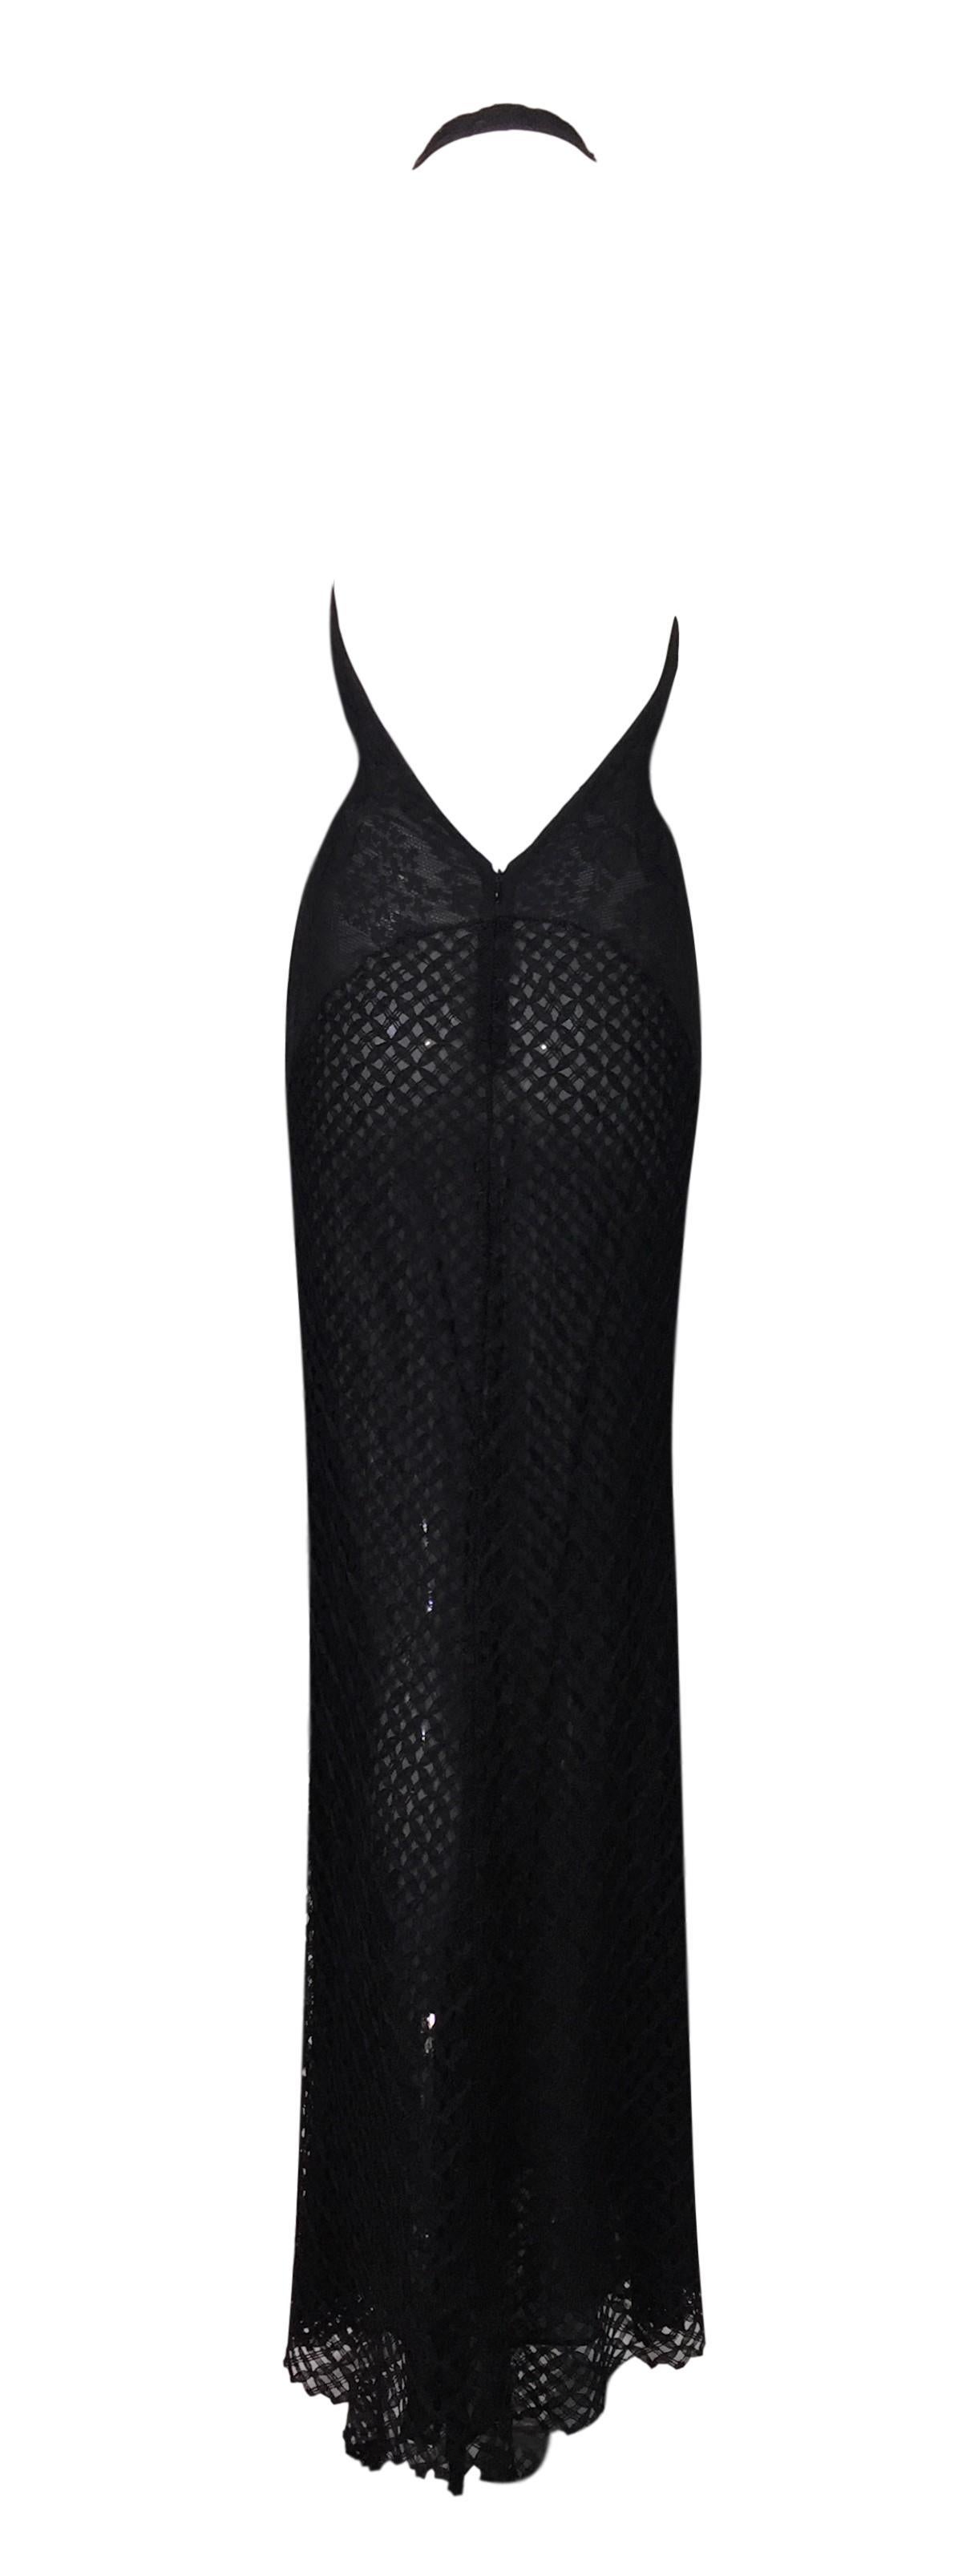 black lace halter dress